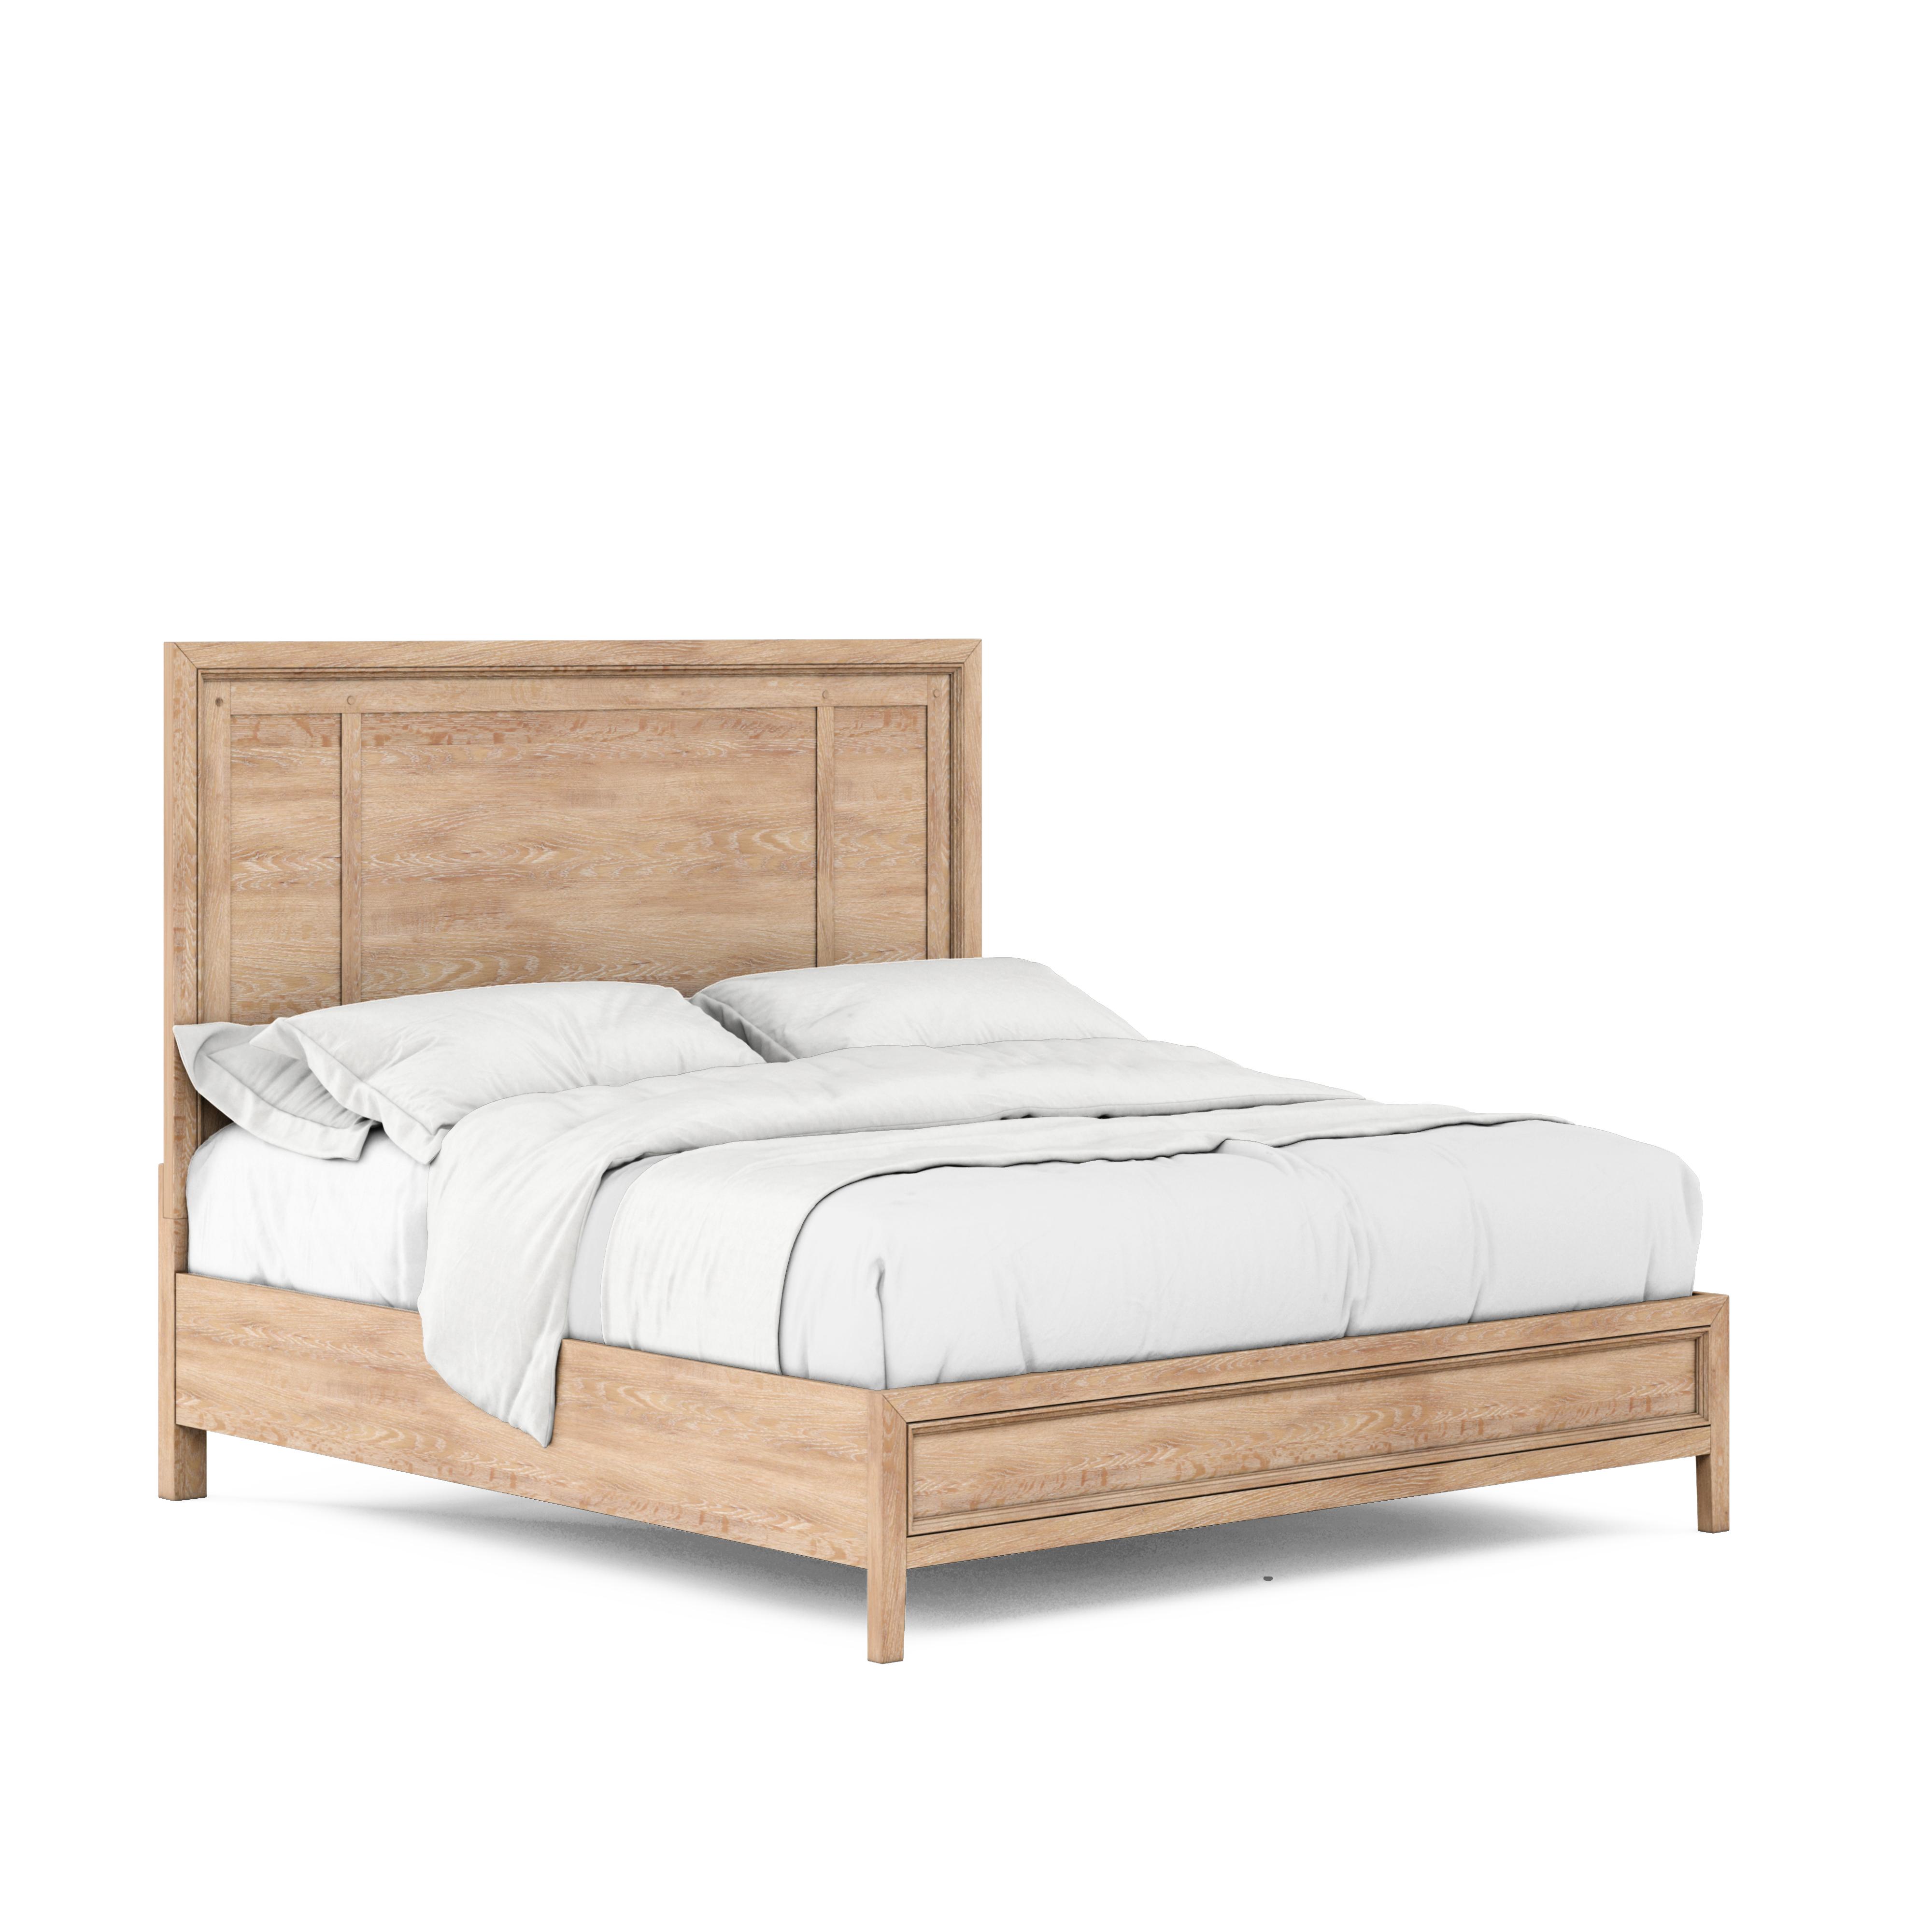 

    
Beige Oak Wood Queen Size Panel Bedroom Set 6Pcs by A.R.T. Furniture Post
